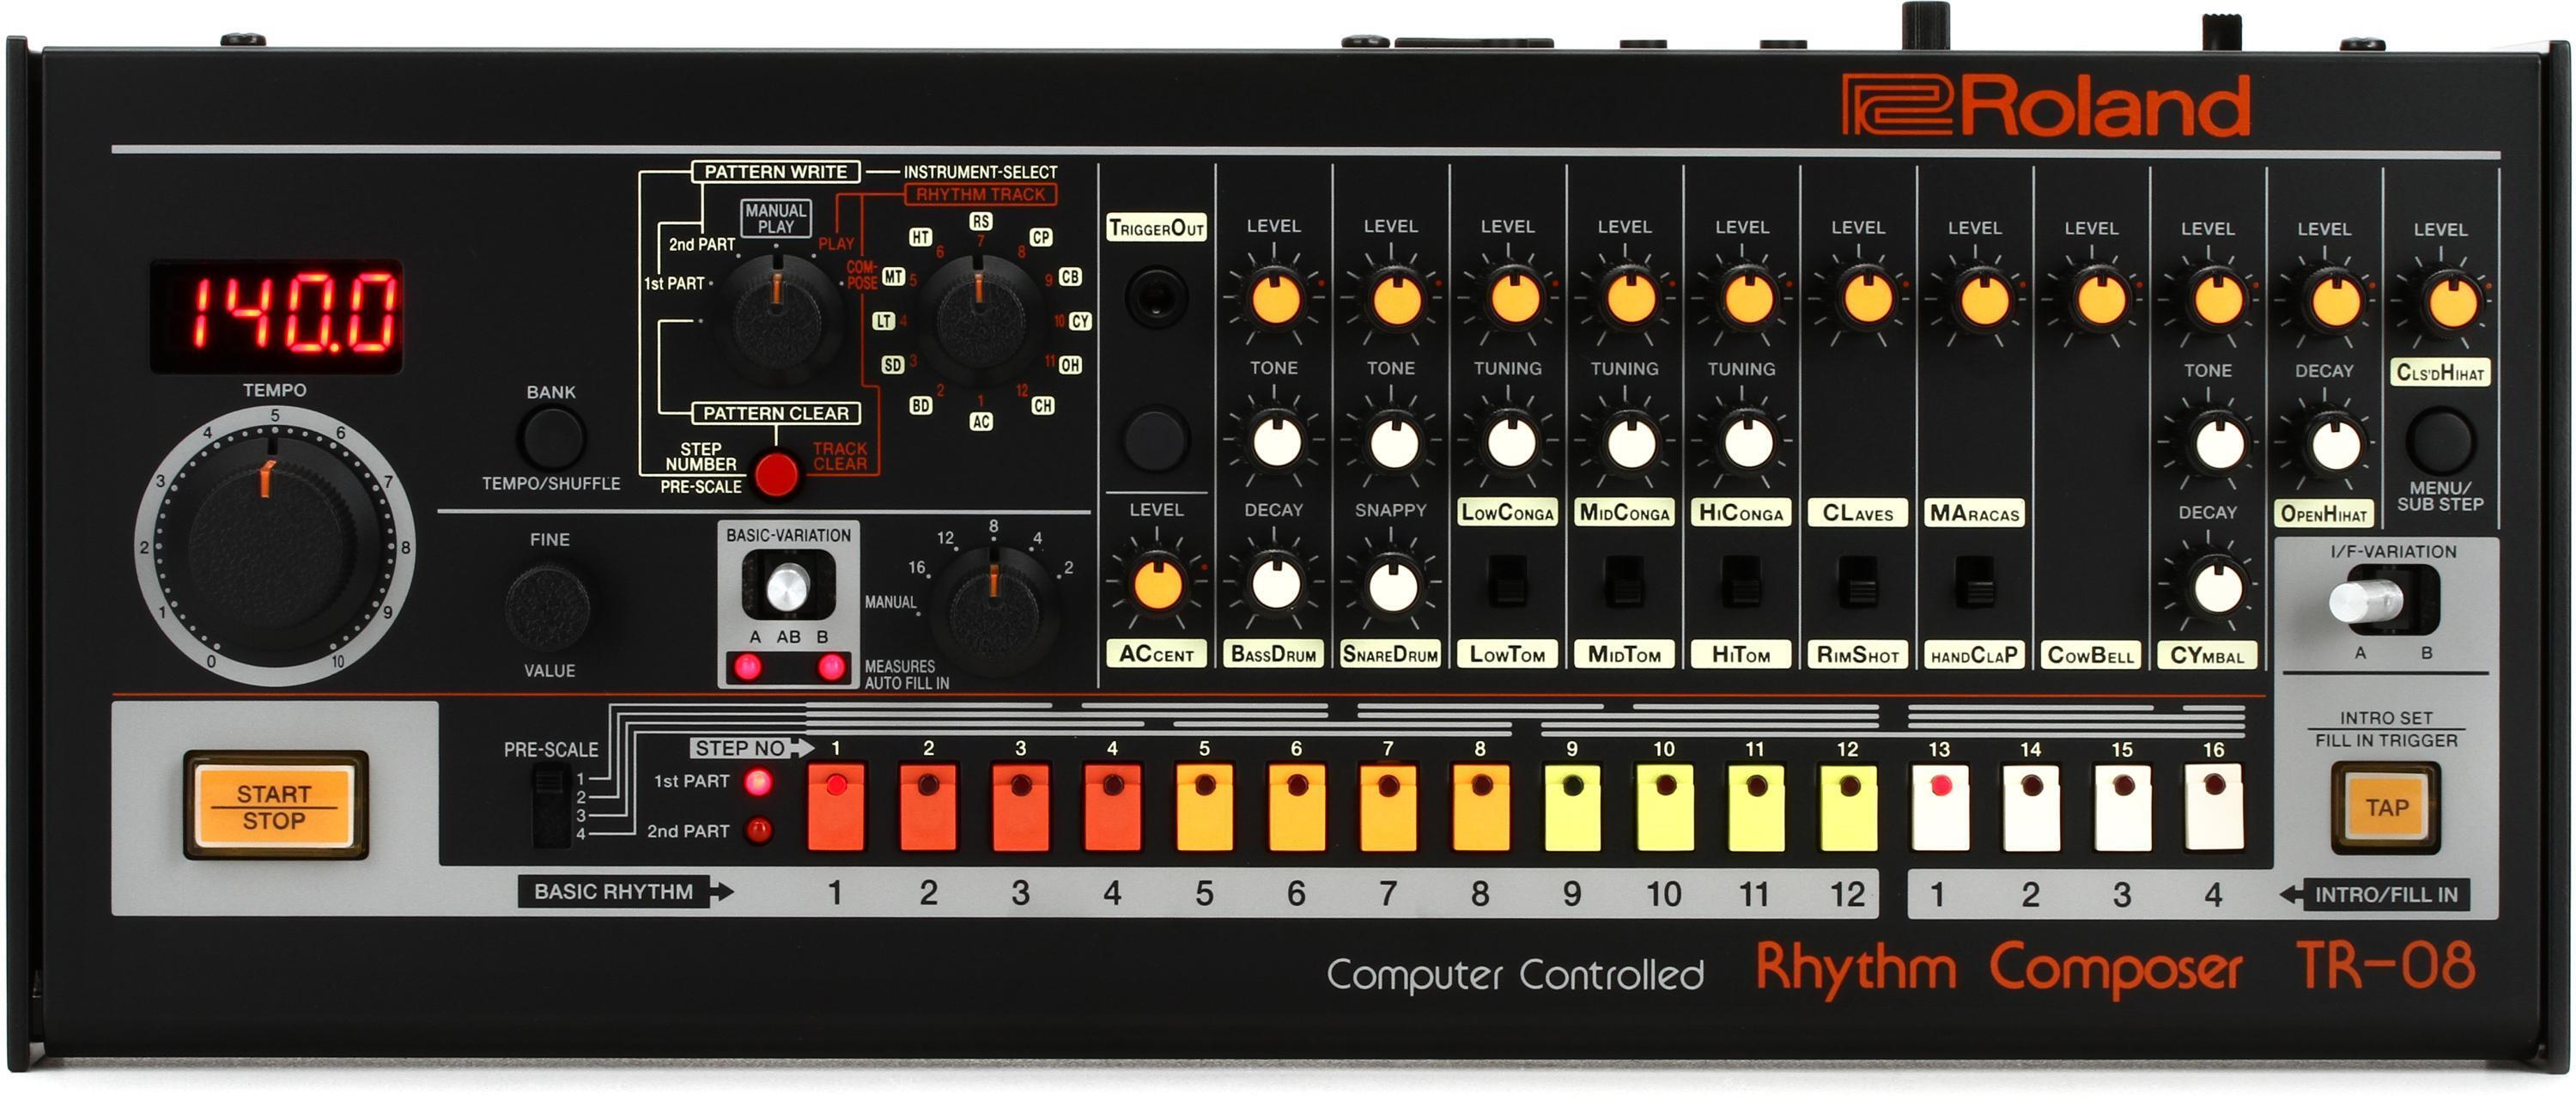 Bundled Item: Roland TR-08 Rhythm Composer